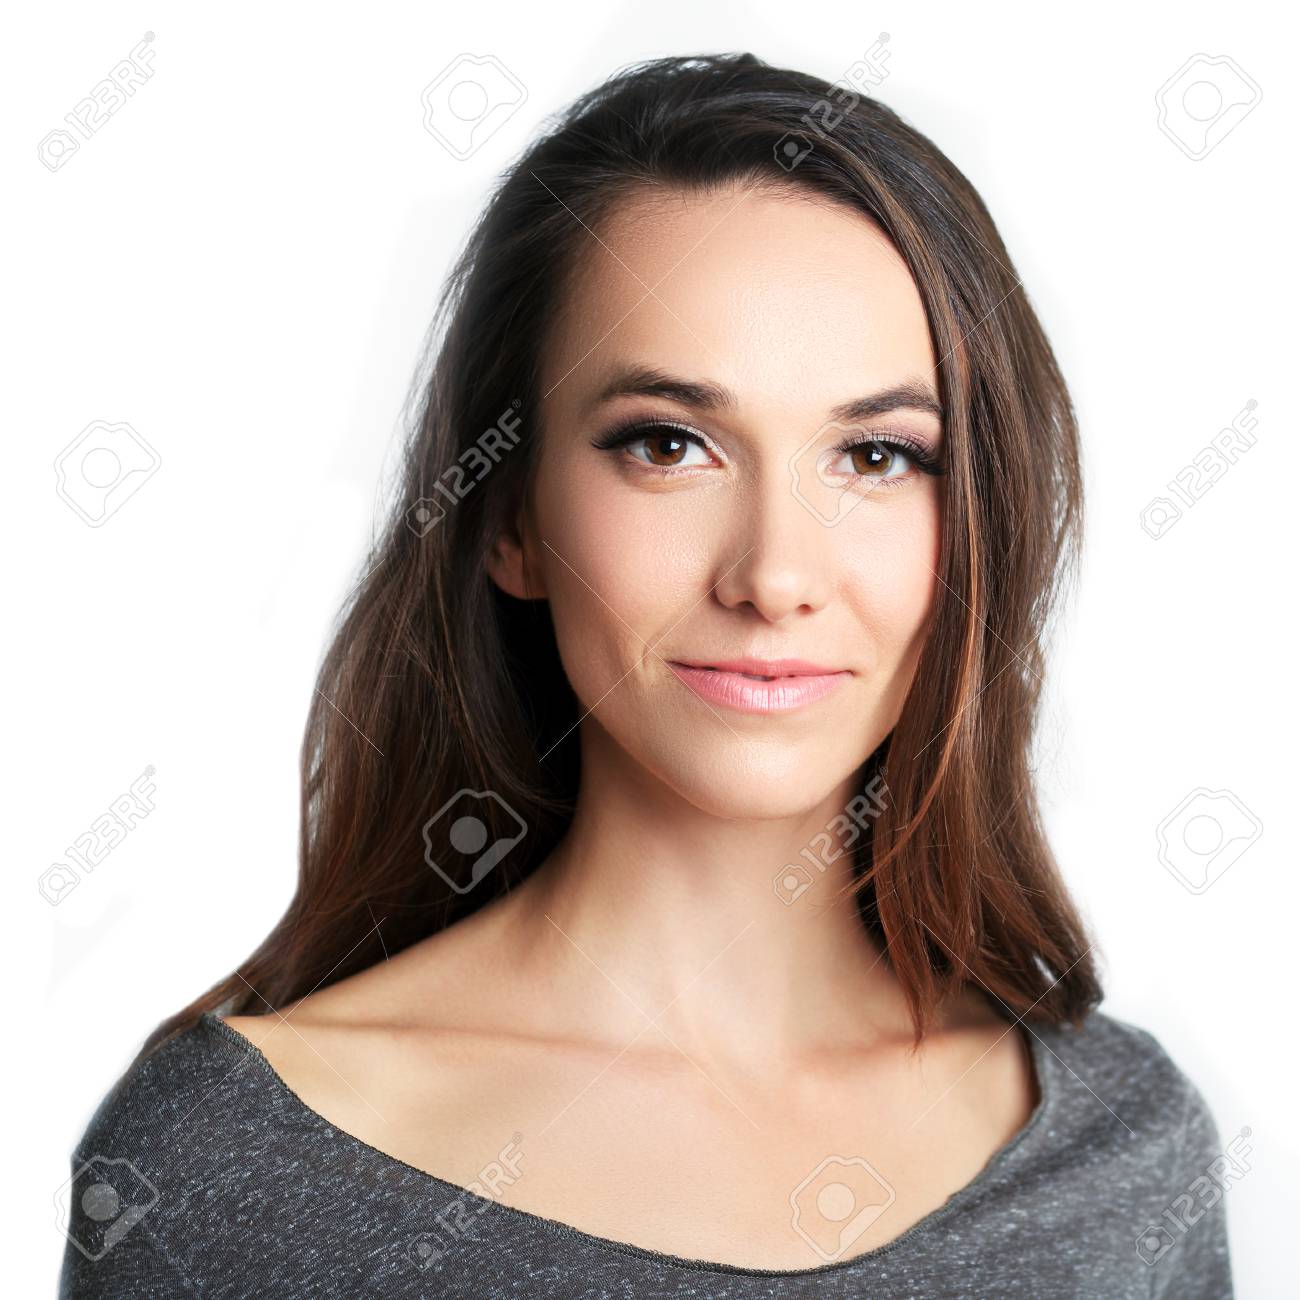 Beautiful Woman Headshot Over White Background Stock Photo